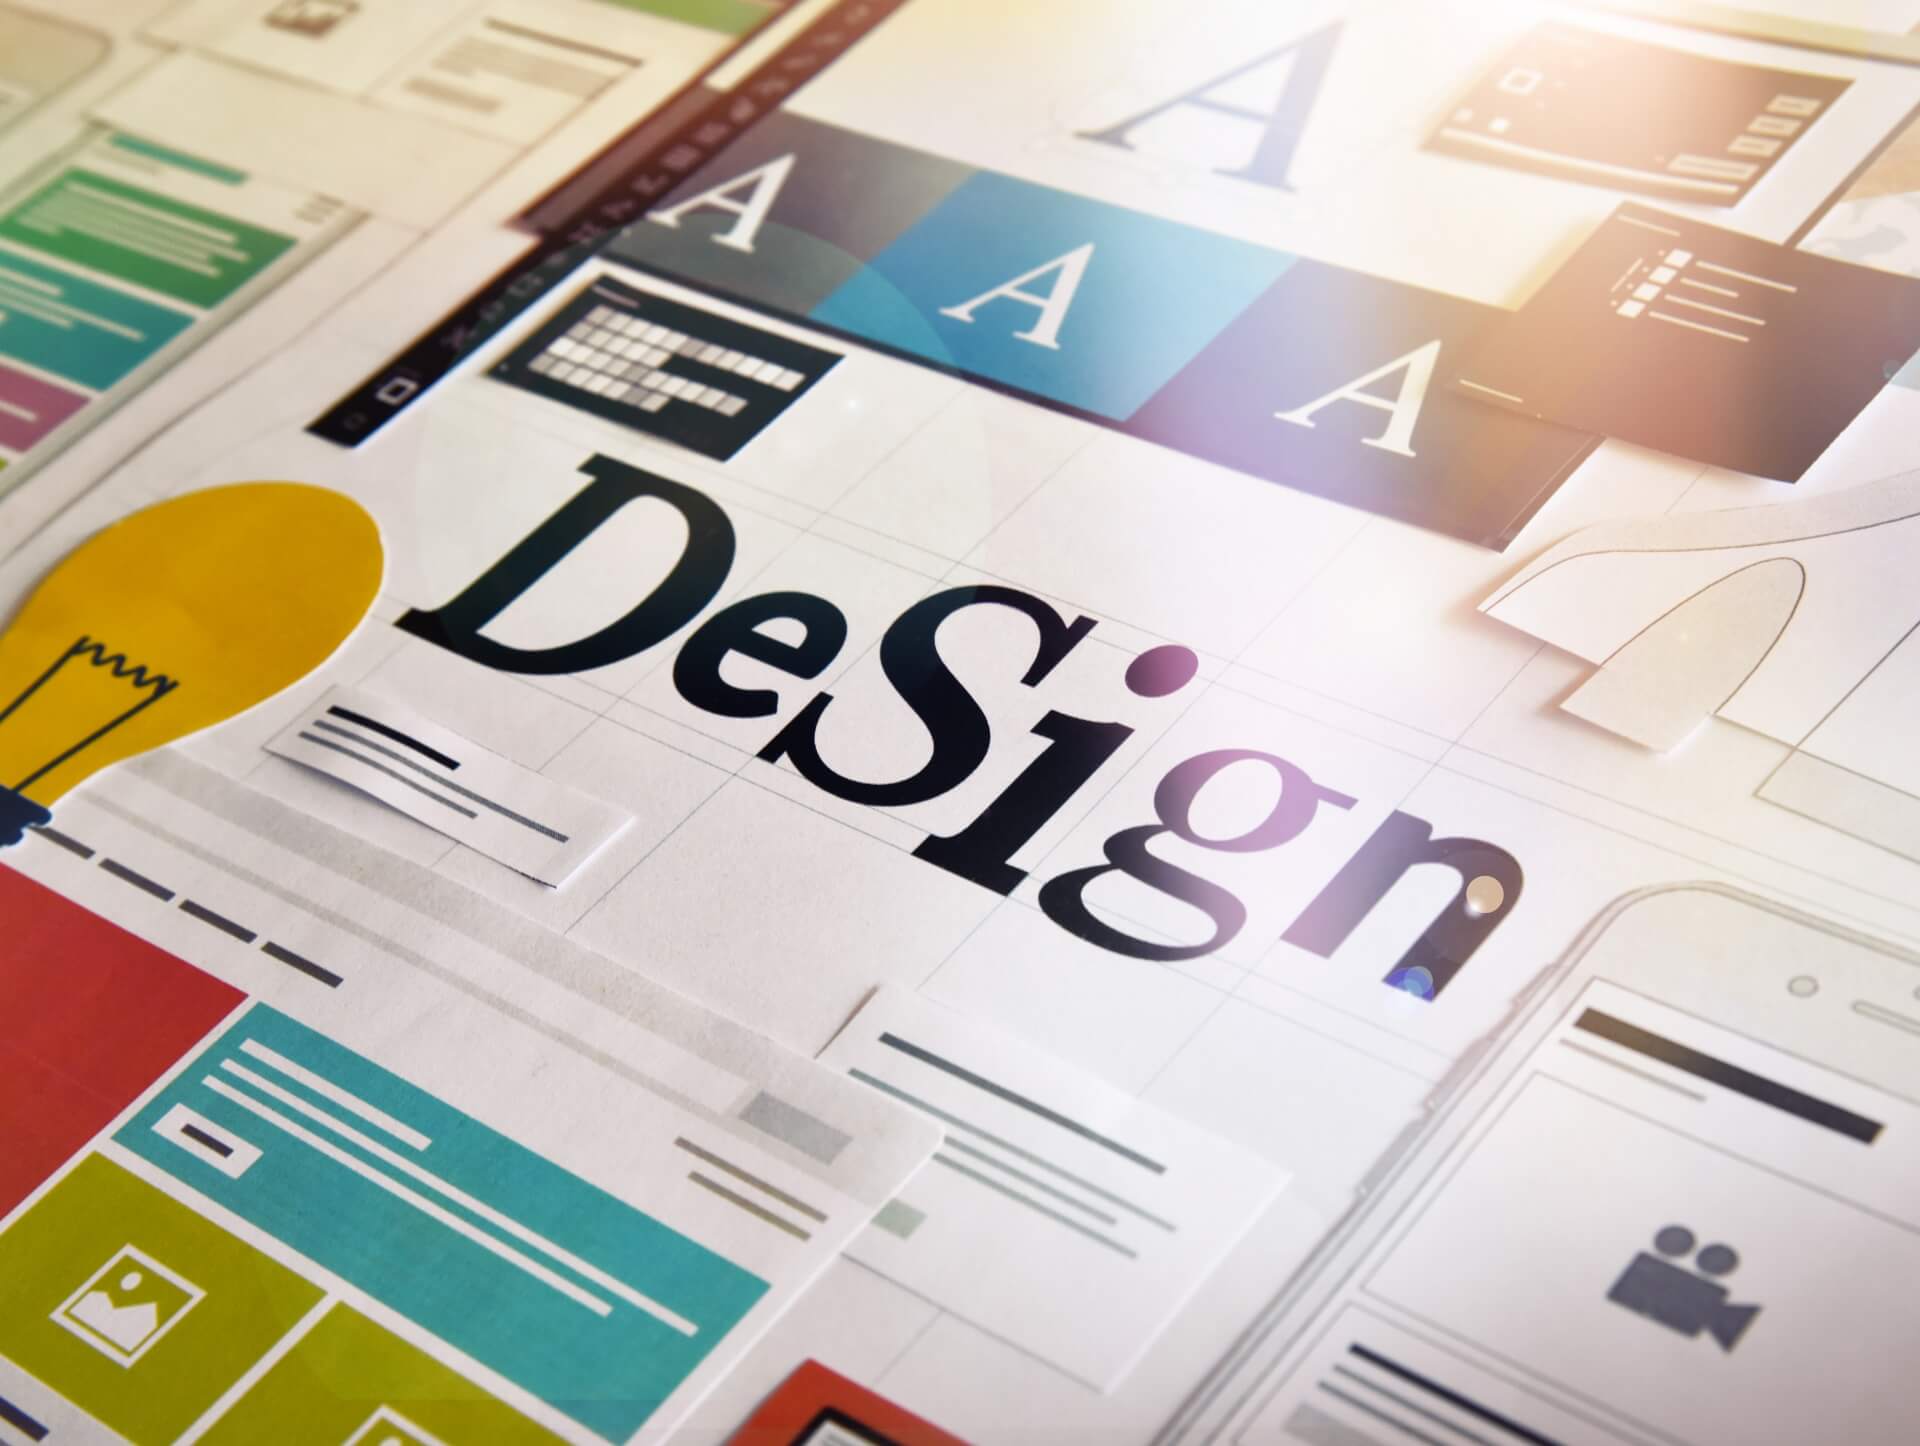 The influence of minimalist design in graphic design